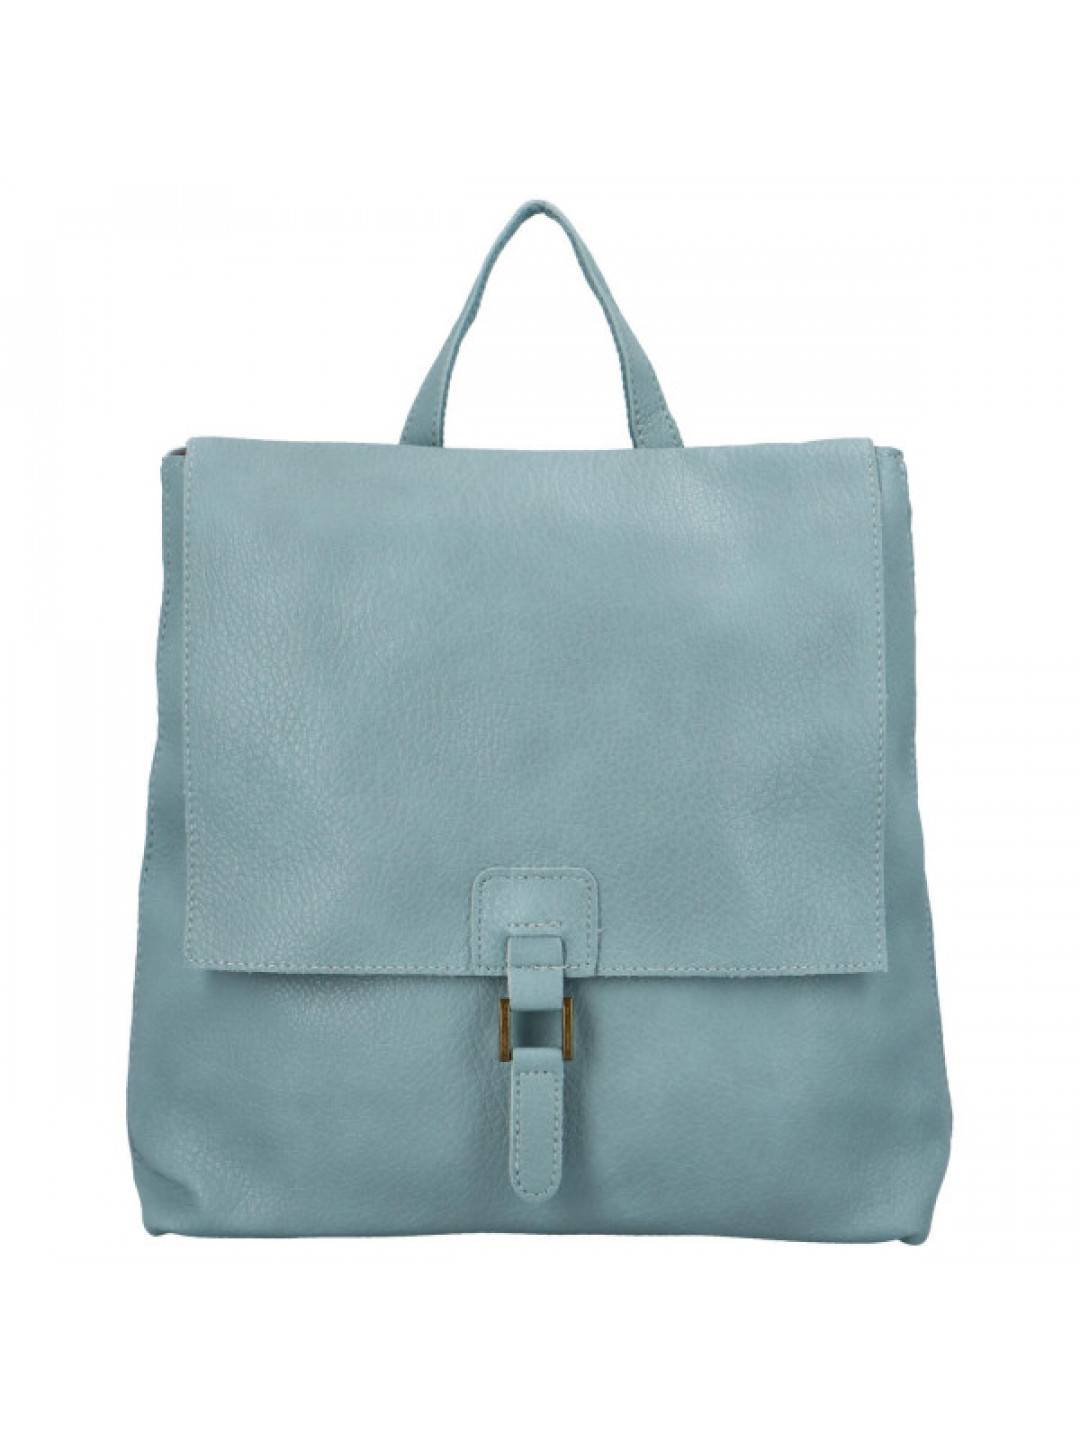 Stylový dámský koženkový kabelko-batoh Octavius džínovo-modrý